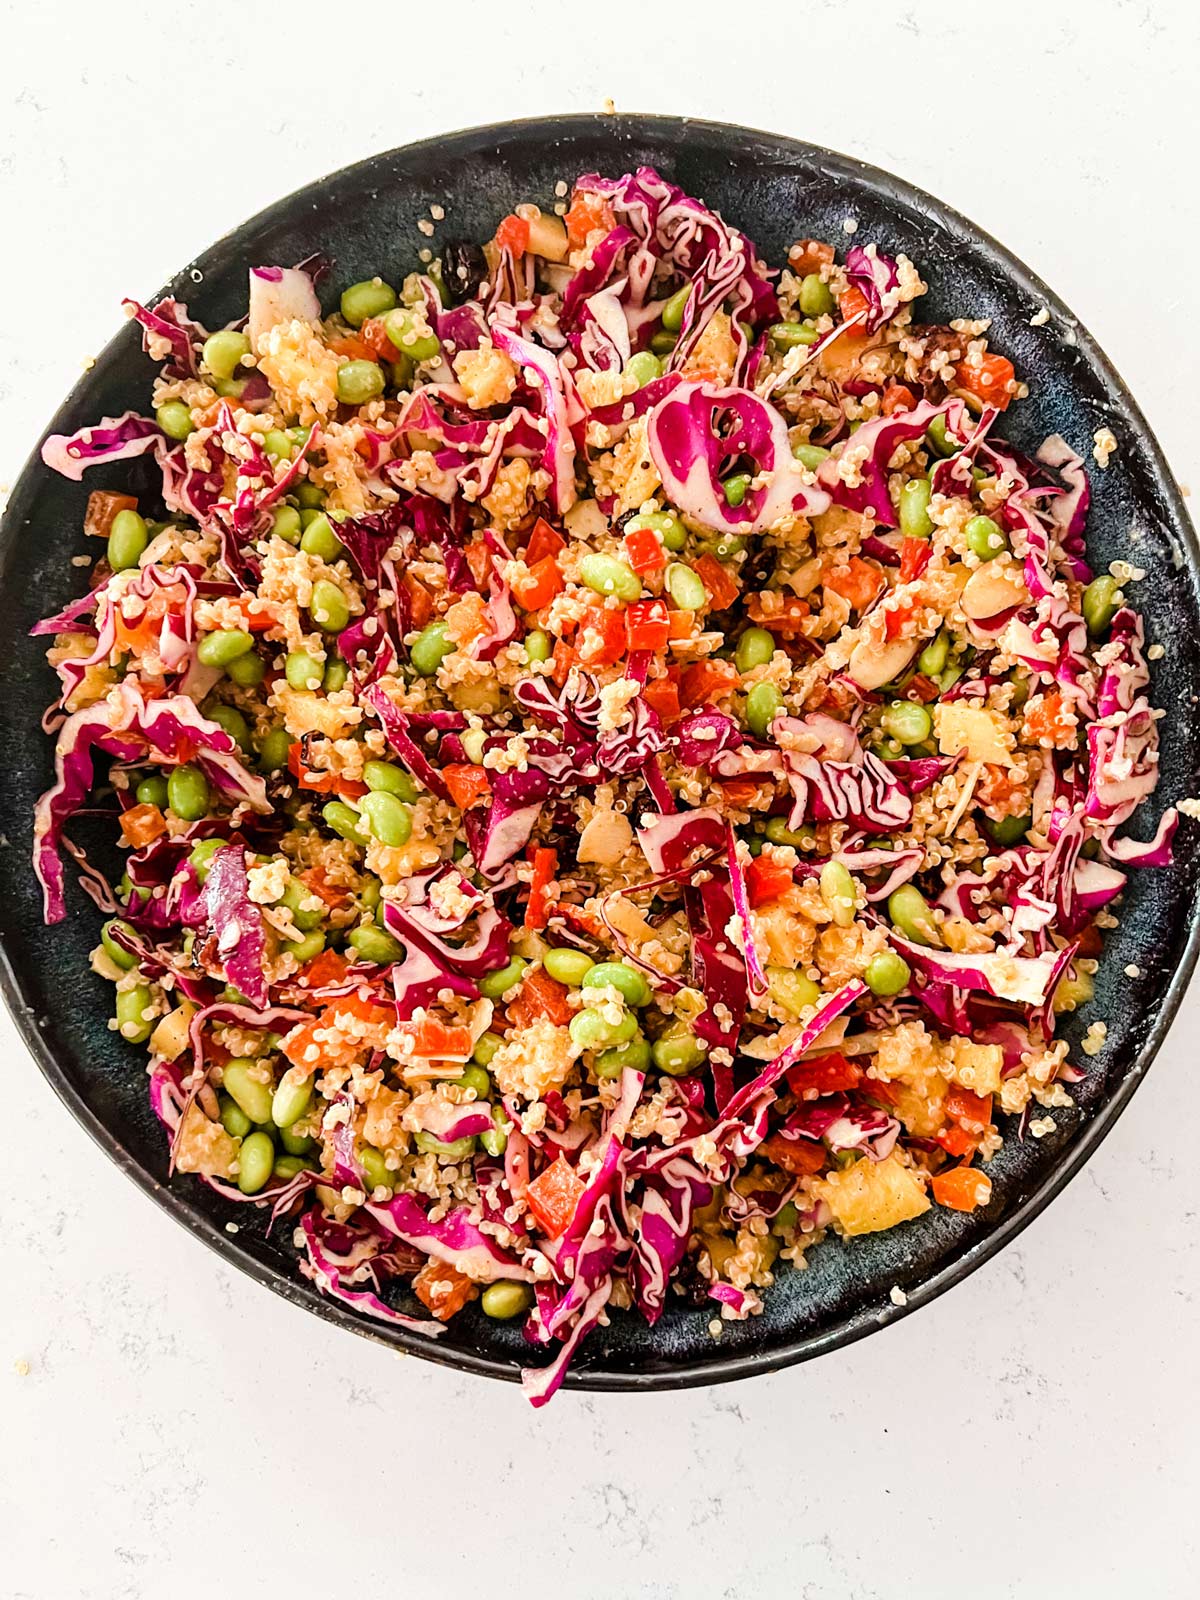 A mixed edamame quinoa salad in a blue bowl.